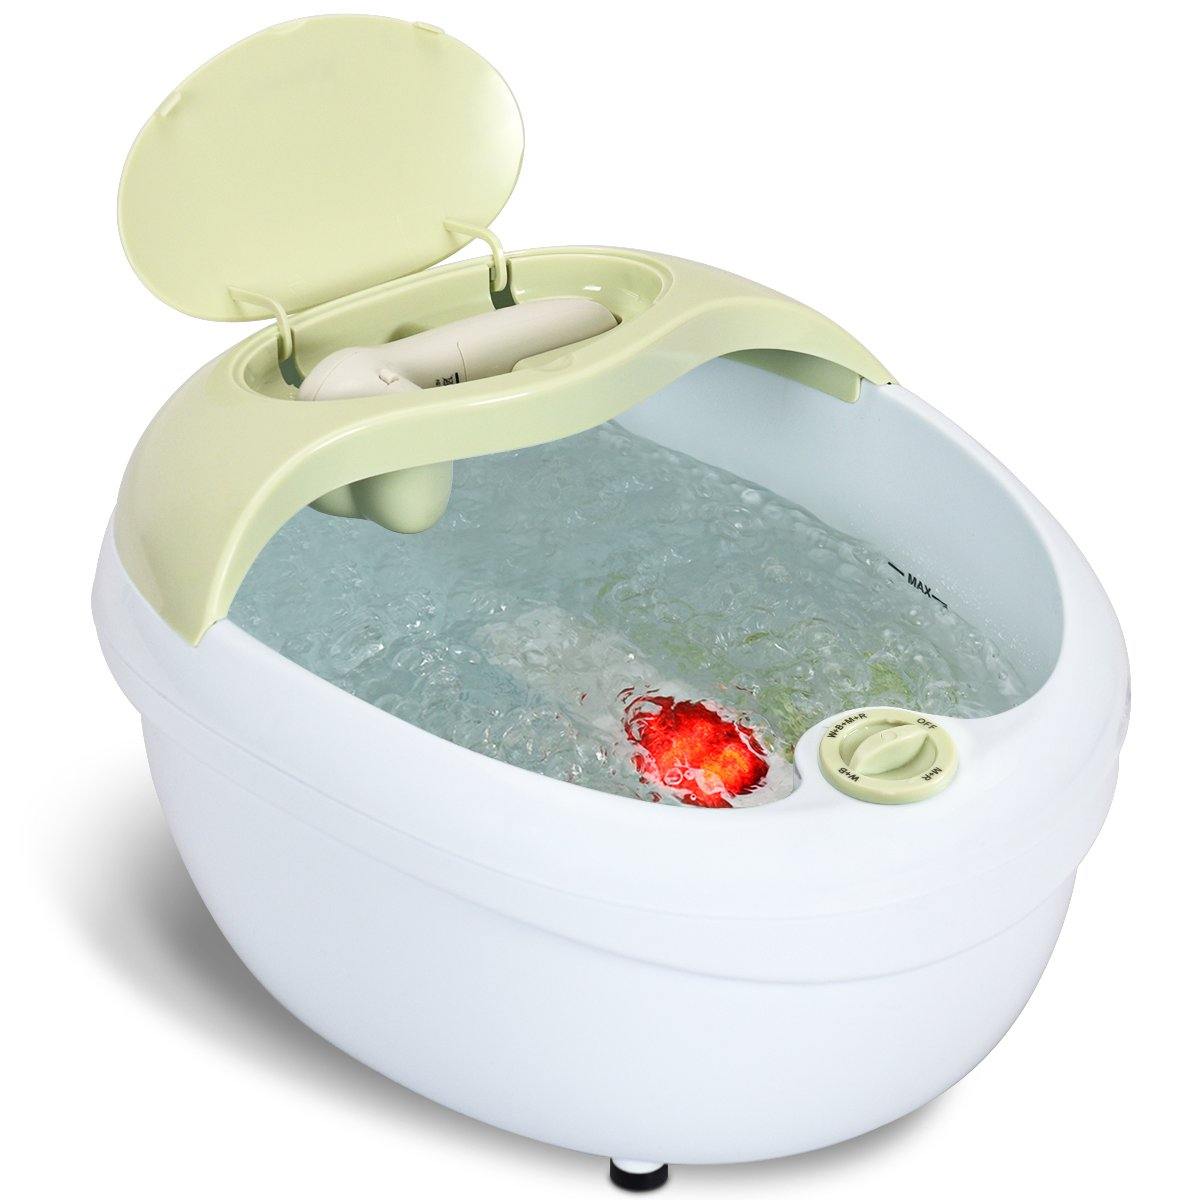 Giantex Foot Bath Massager Spa, Warm Heat Bubbles Electric Handheld Pedicure Feet Scrubber Removable Cover Vibration Massage (Green) - Giantexus